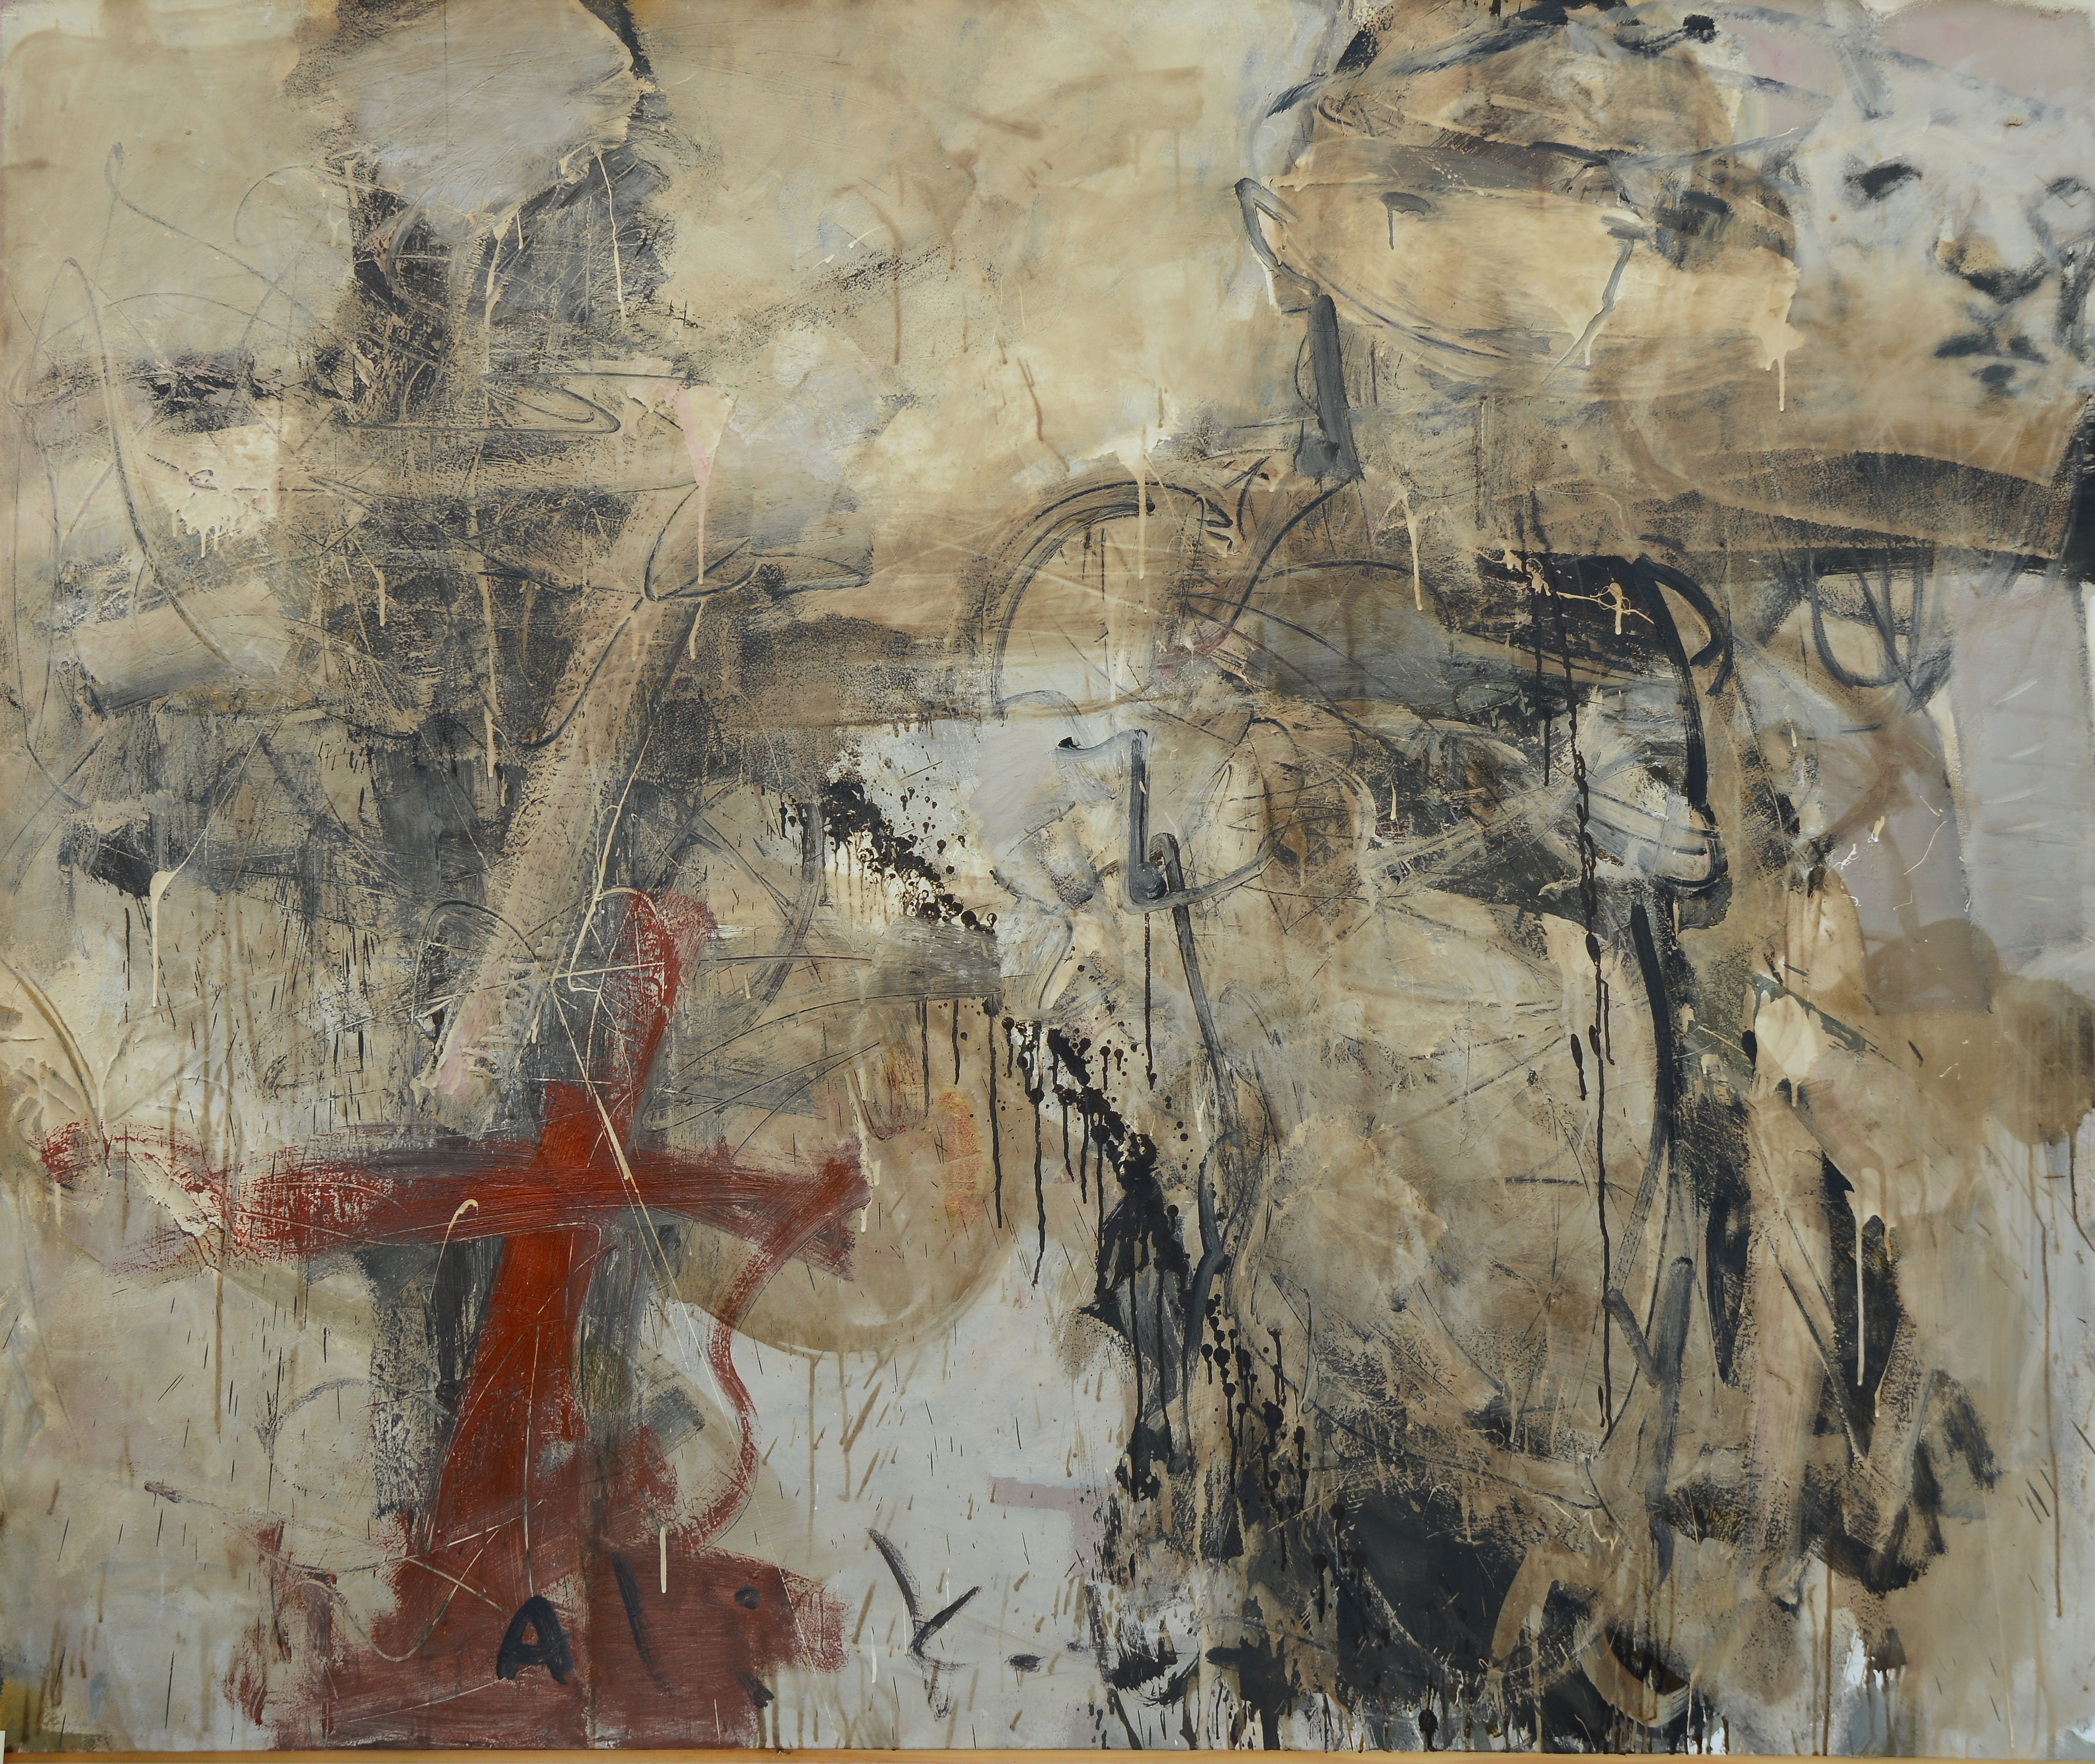 ALİ KOTAN, İsimsiz- Untitled, 2011, Tuval üzerine karışık teknik- Mixed media on canvas, 150X180 cm